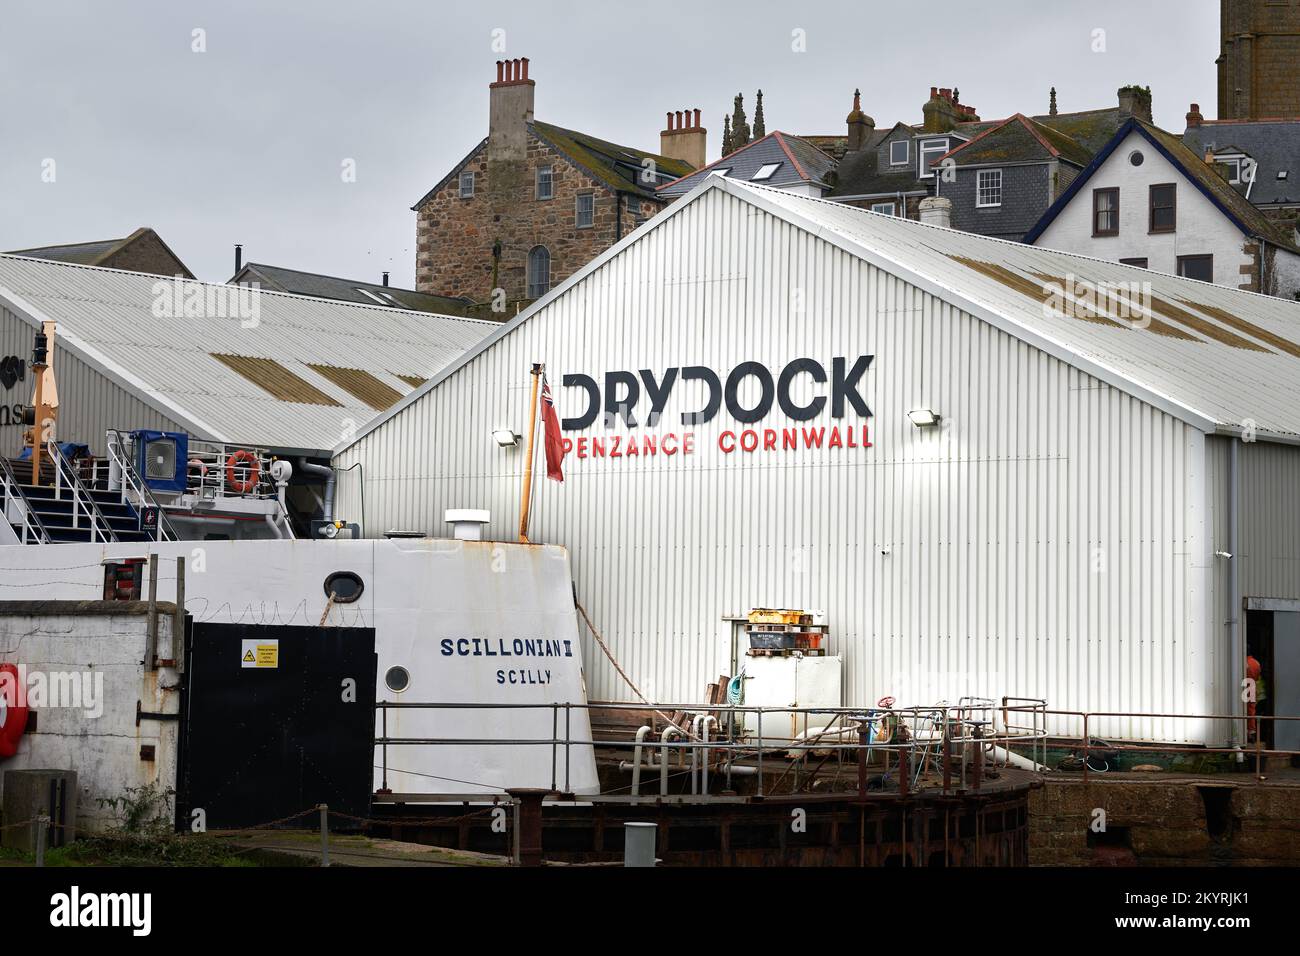 Drydock building at Penzance, England. Stock Photo